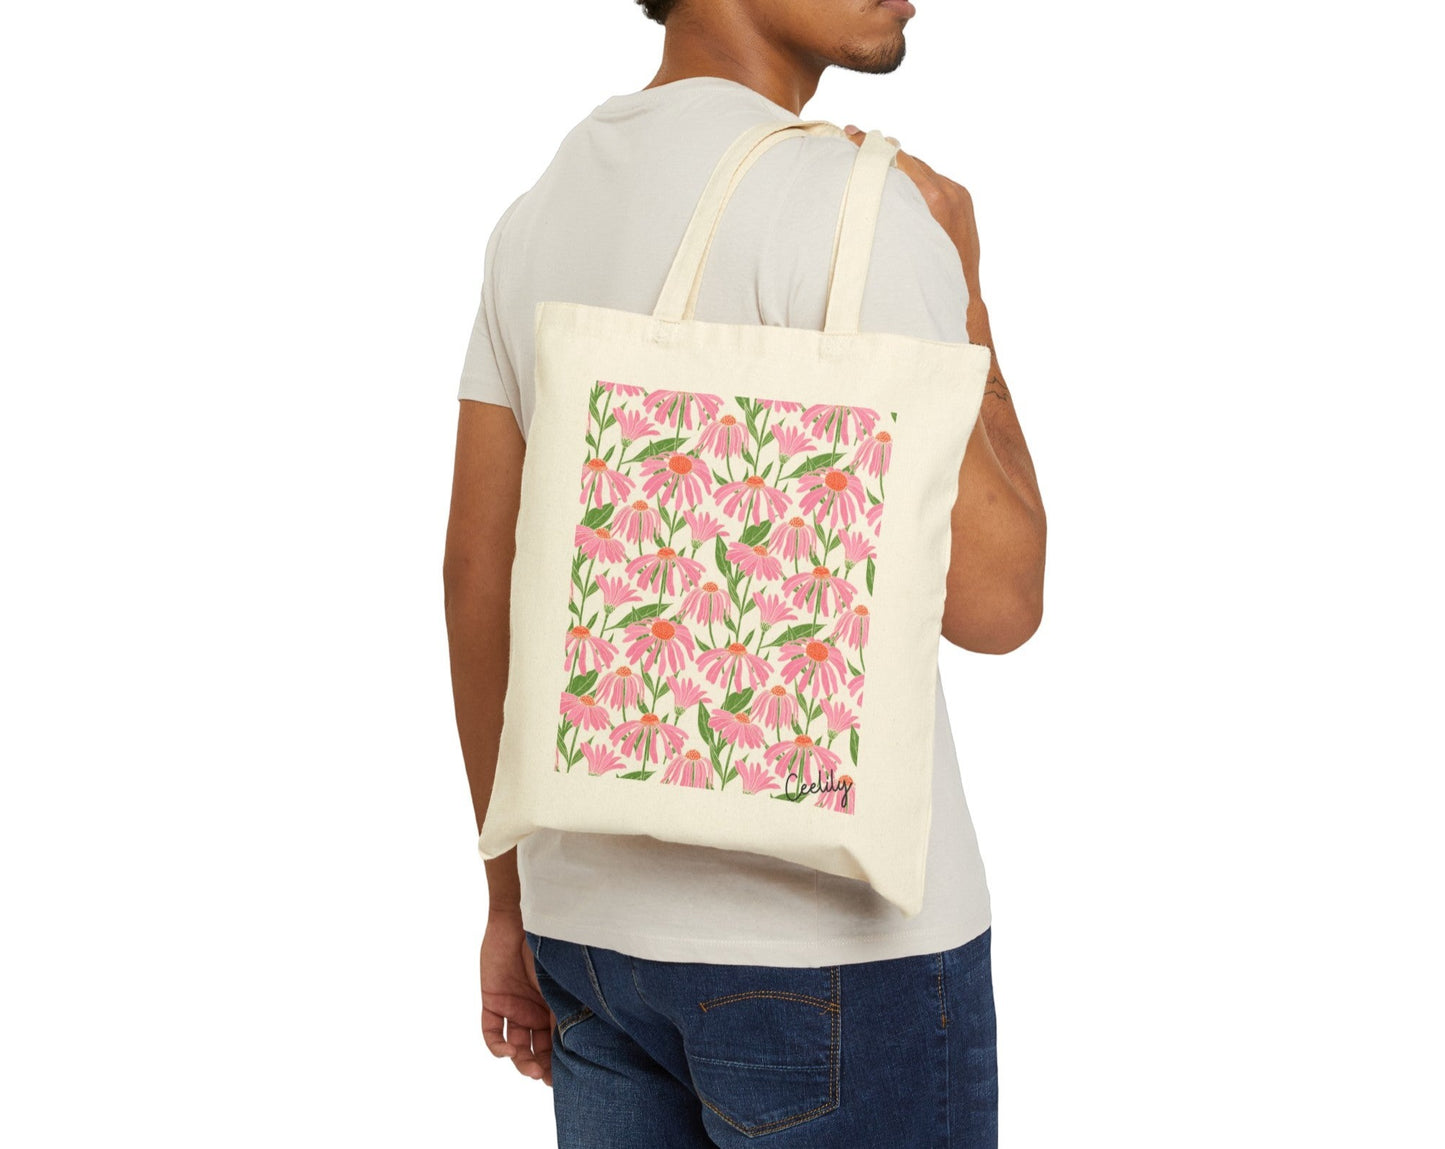 Pink floral tote bag